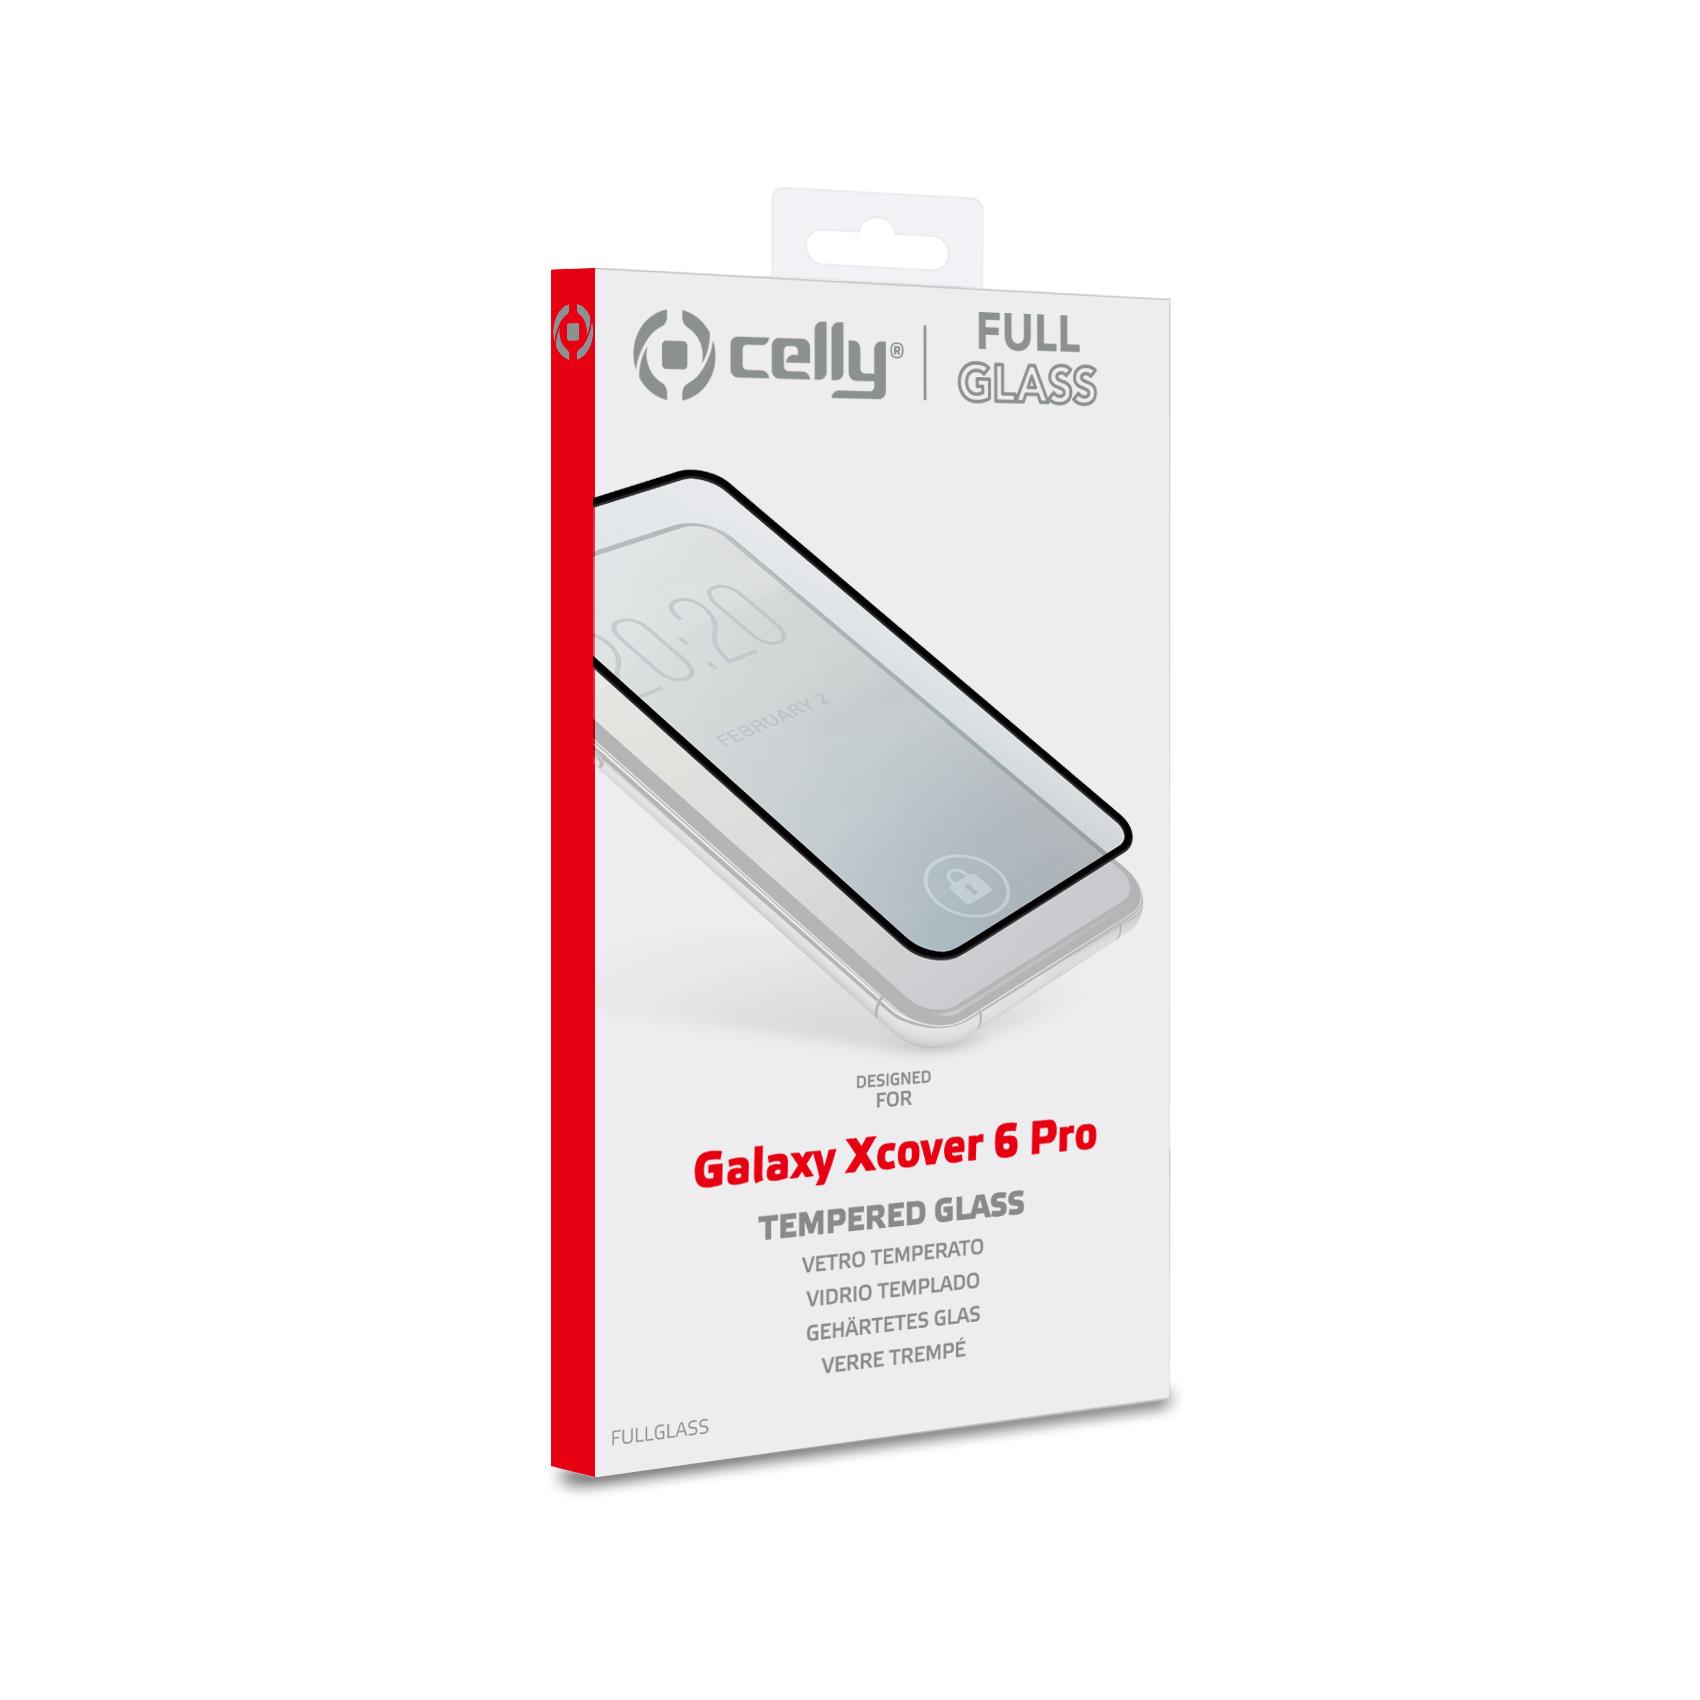 Full Glass Galaxy Xcover 6 Pro Bk Celly Fullglass1031bk 8021735199069